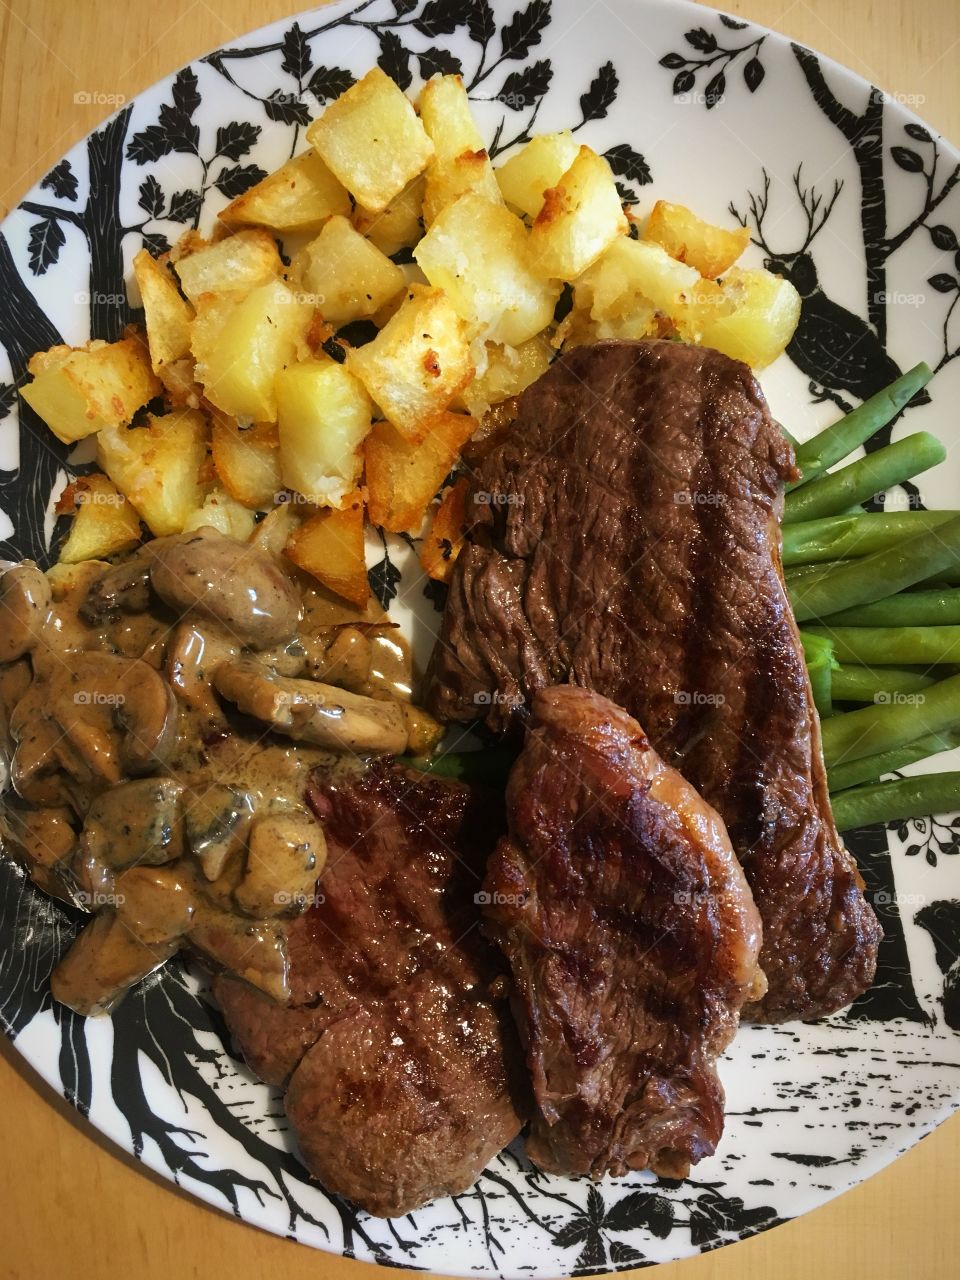 Home Steak and mini roasted garlic potatoes with mushroom sauce